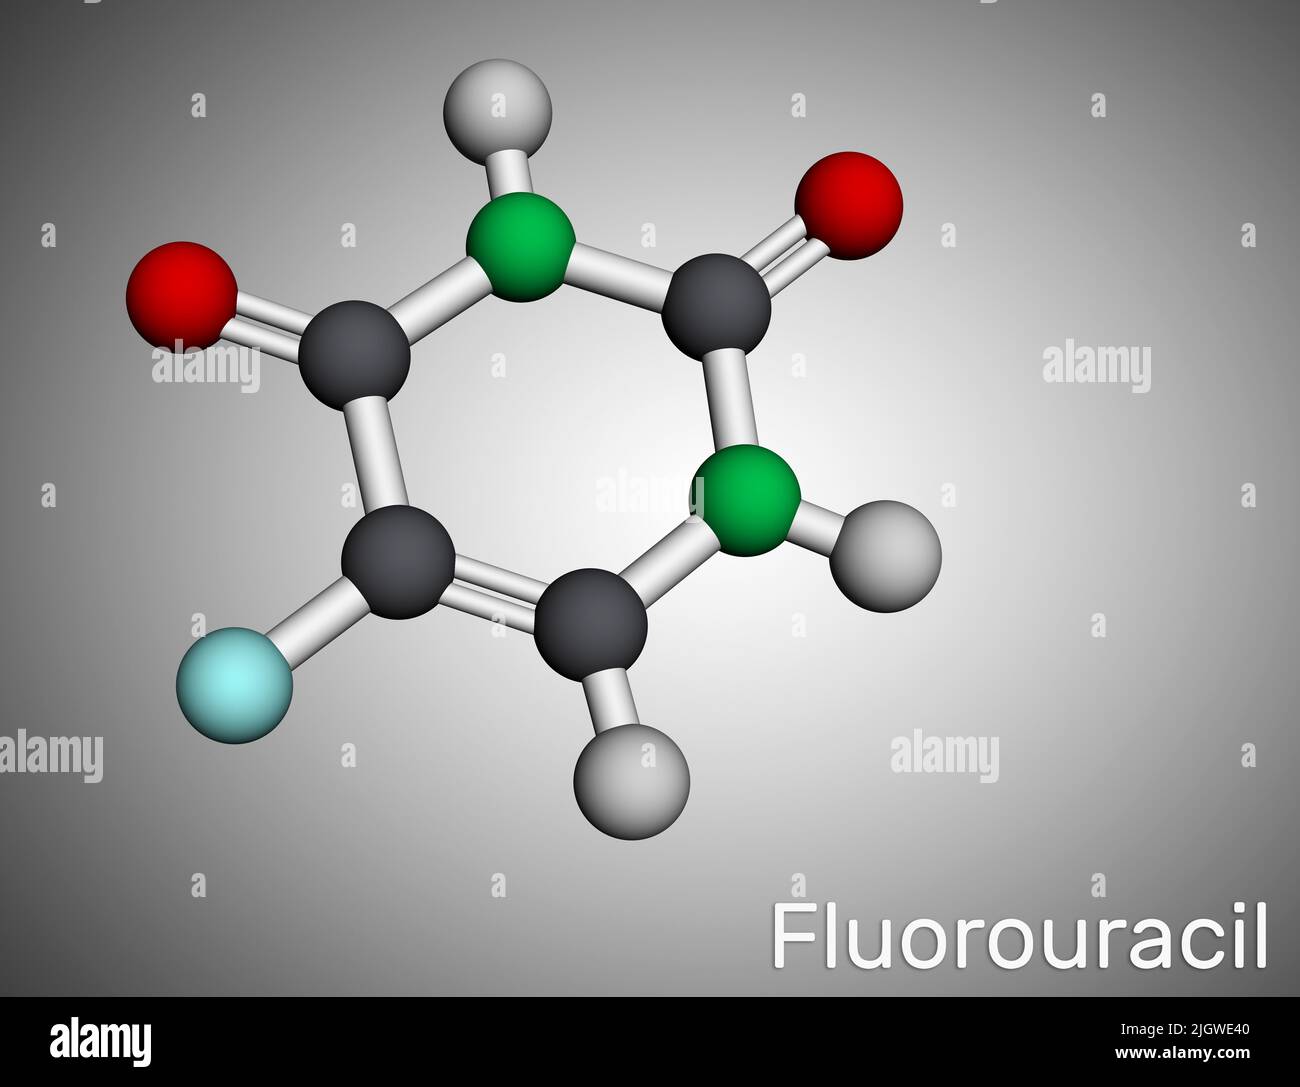 Fluorouracil, 5-FU molecule. It is pyrimidine analog, cytotoxic chemotherapy medication used to treat cancer. Molecular model. 3D rendering. Illustrat Stock Photo